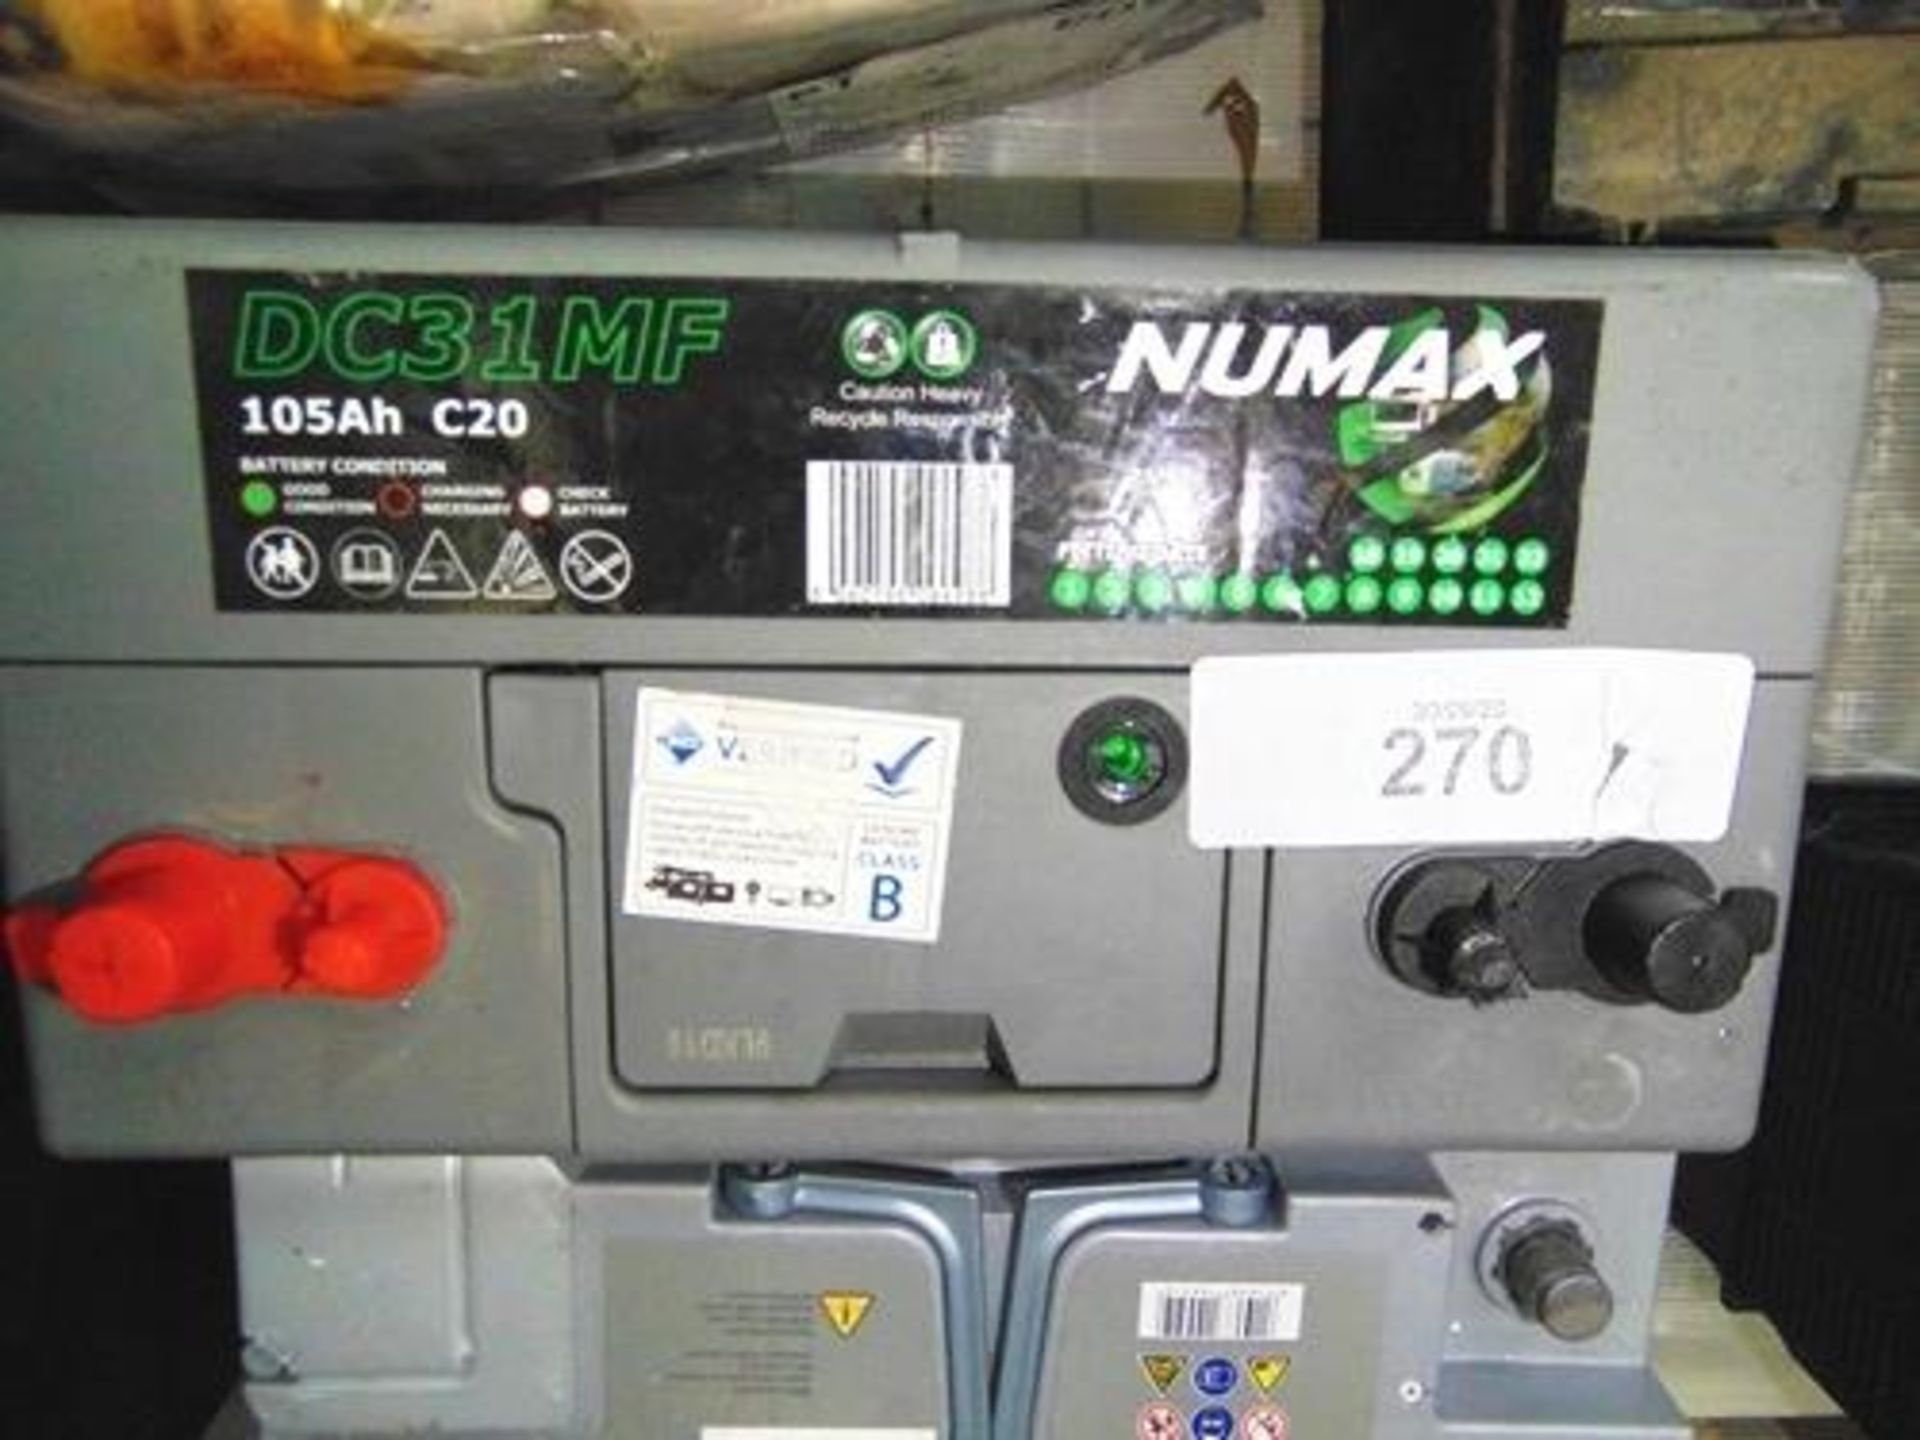 Numax DC31 MF 105ah C20 12V leisure battery - New (GS7)